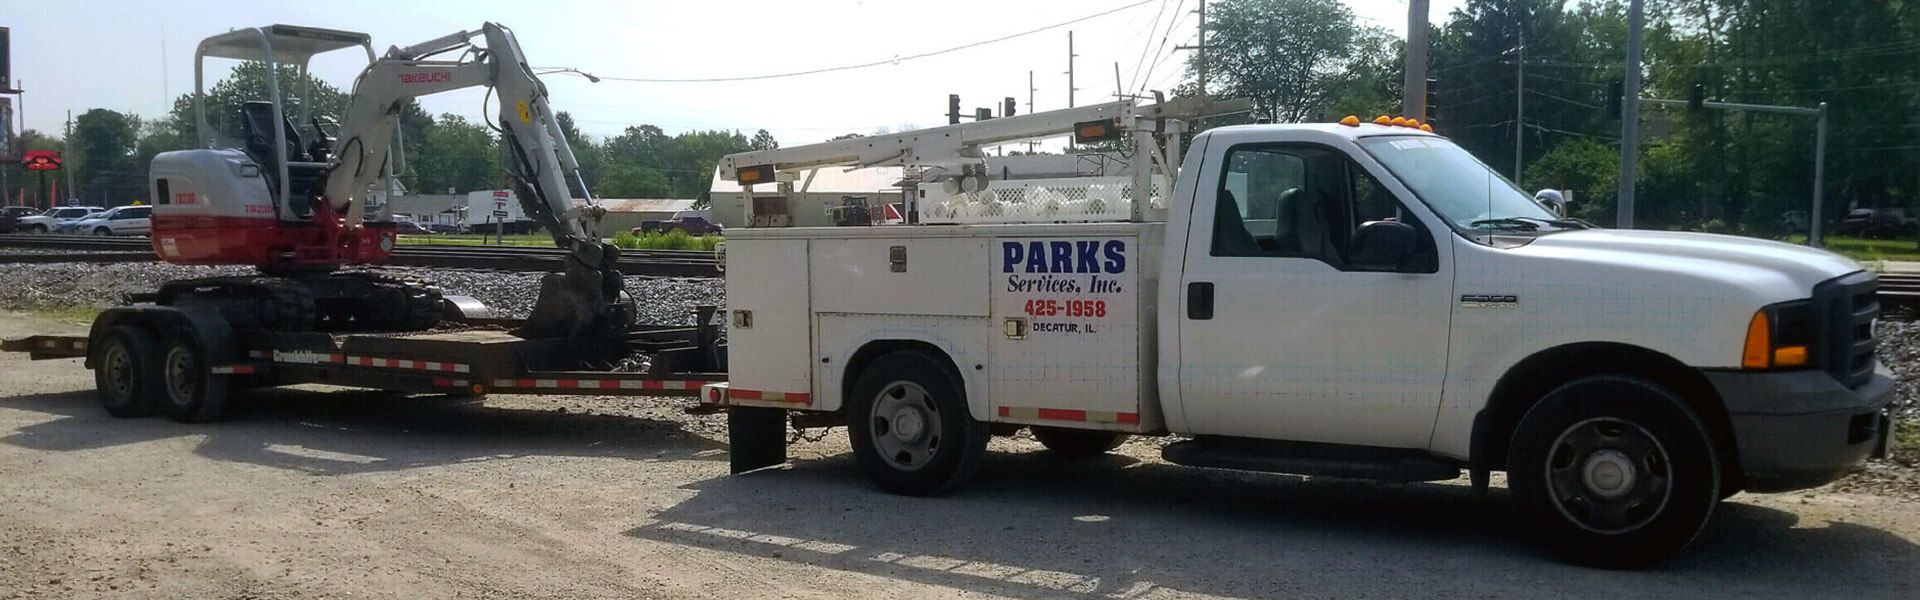 Complete Sewer Service Company in Decatur IL